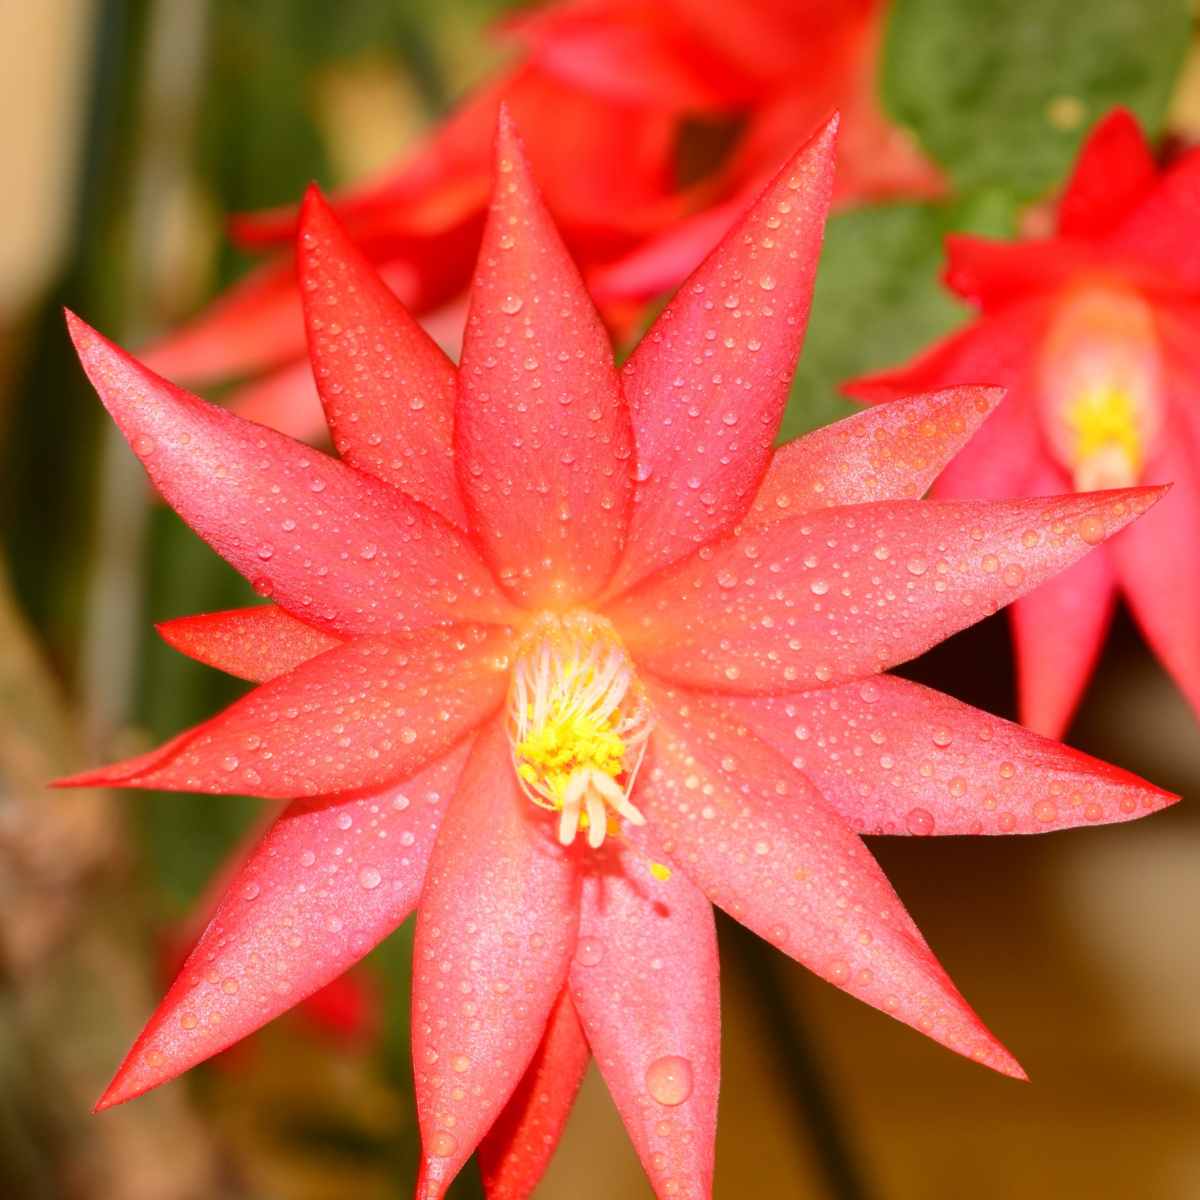 Red rhipsalidopsis gaertneri flower.